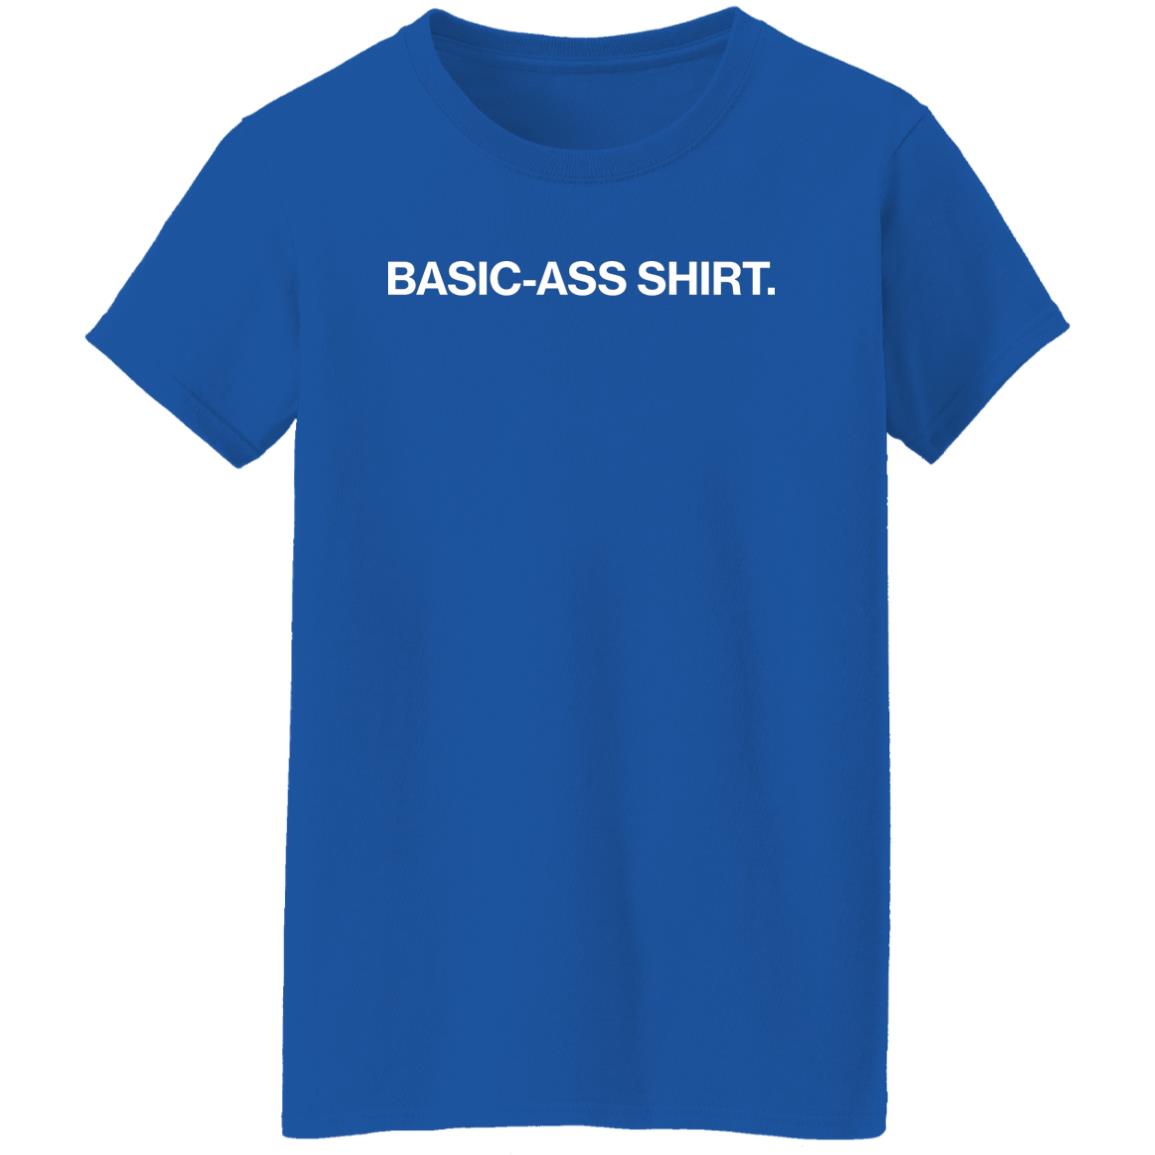 Obvious Shirts Store Basic Ass Shirt Shirt